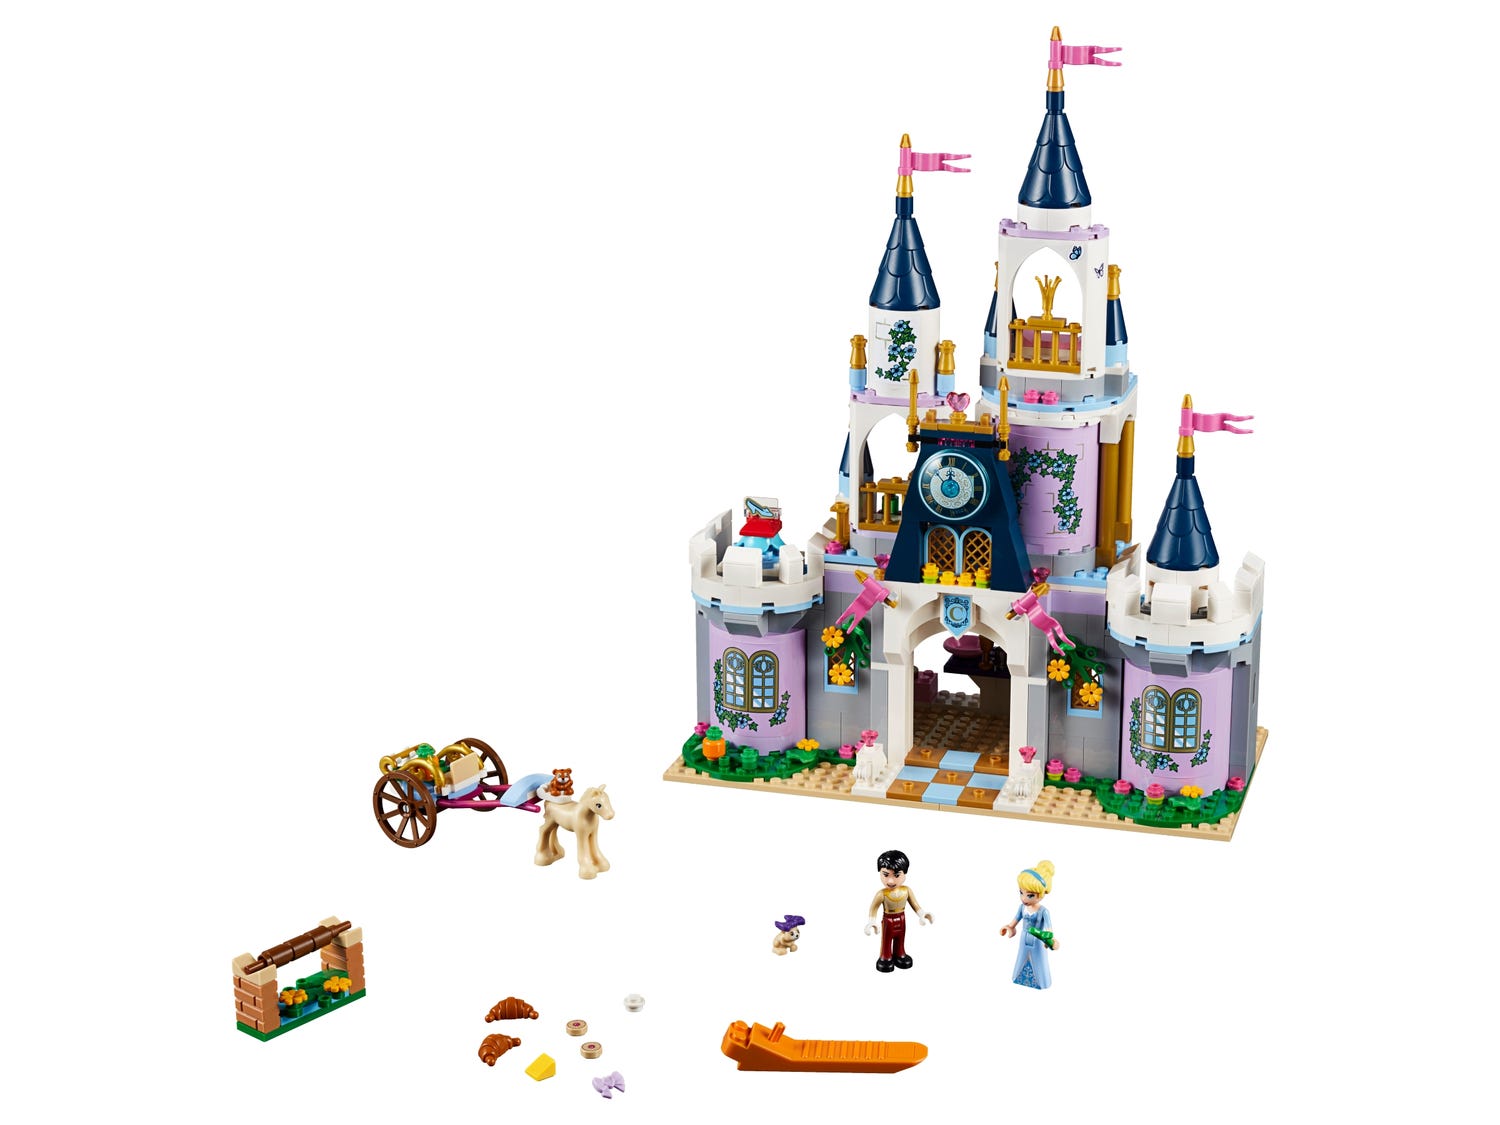 Cinderella's Castle 41154 | Disney™ | online at the Official LEGO® Shop